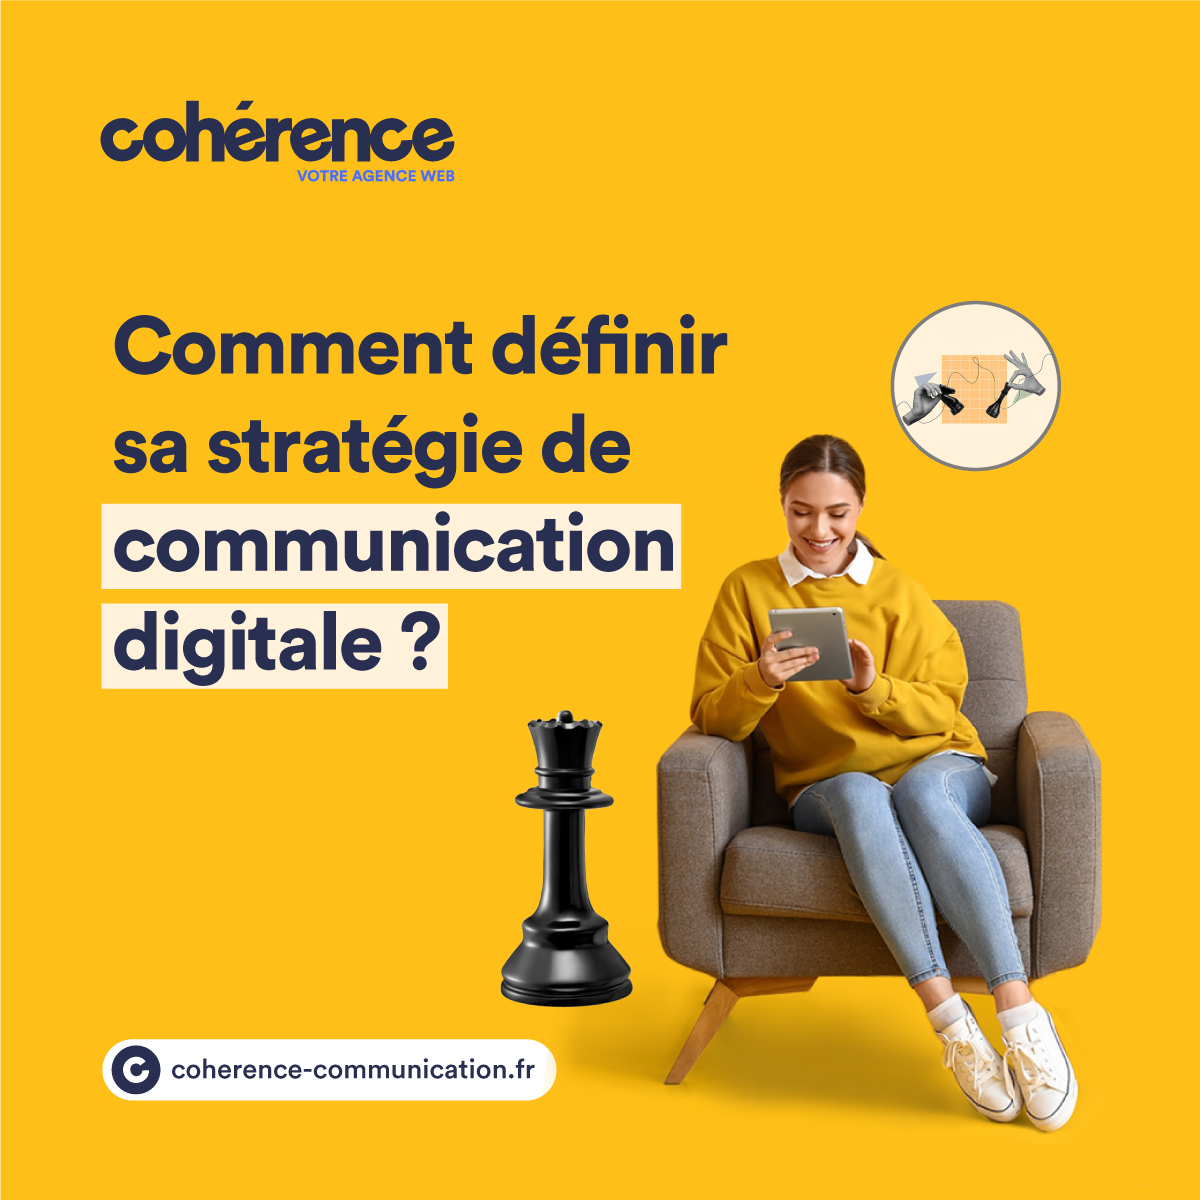 Coherence Agence Web Comment Definir Sa Strategie De Communication Digitale